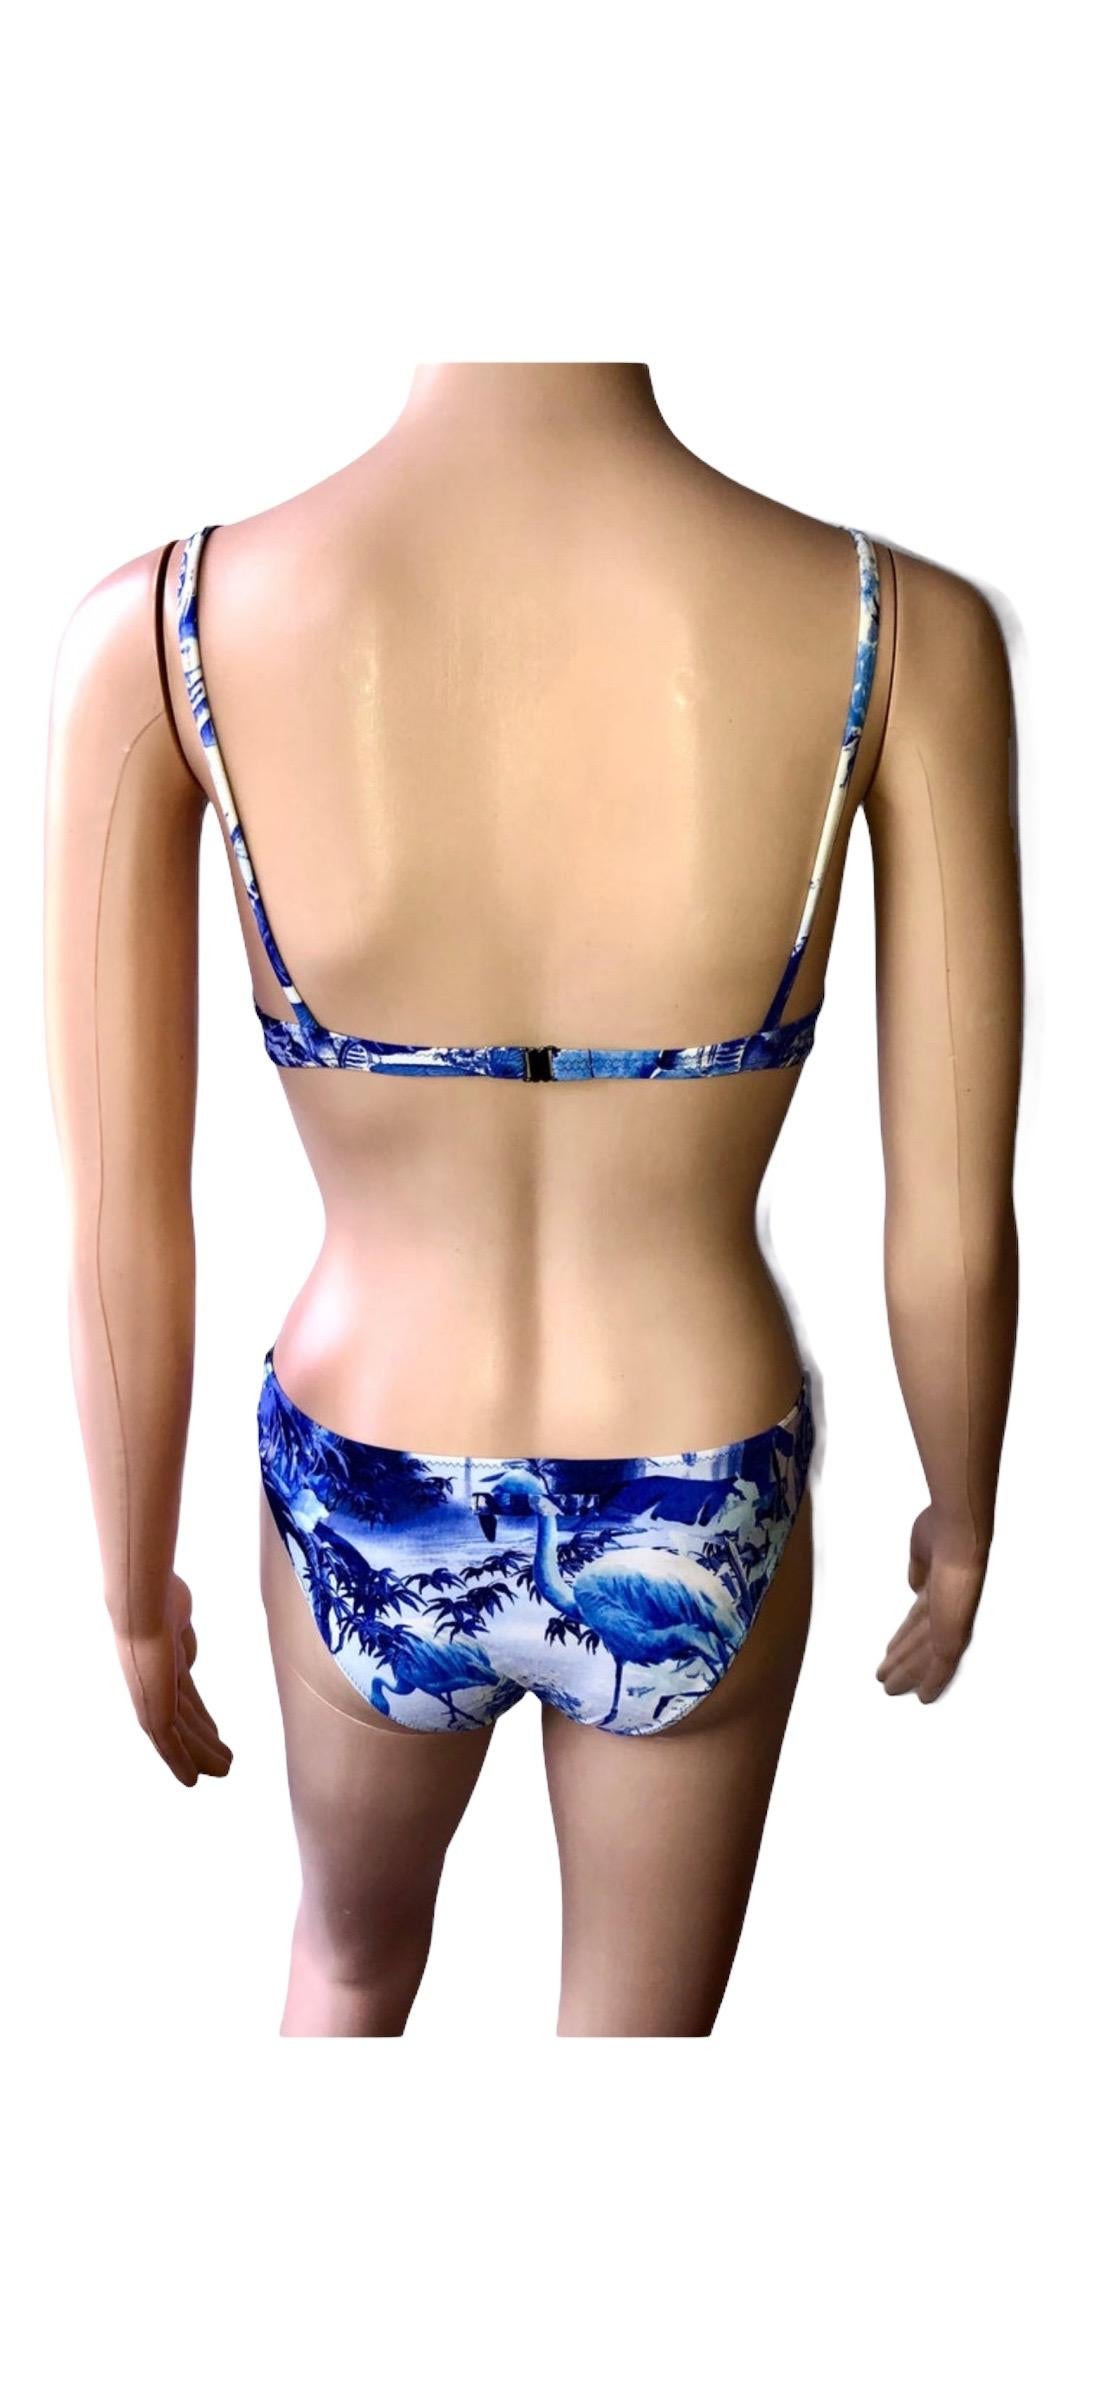 Jean Paul Gaultier Soleil S/S 1999 Flamingo Tropical Bikini Swimsuit 2 Piece Set For Sale 9